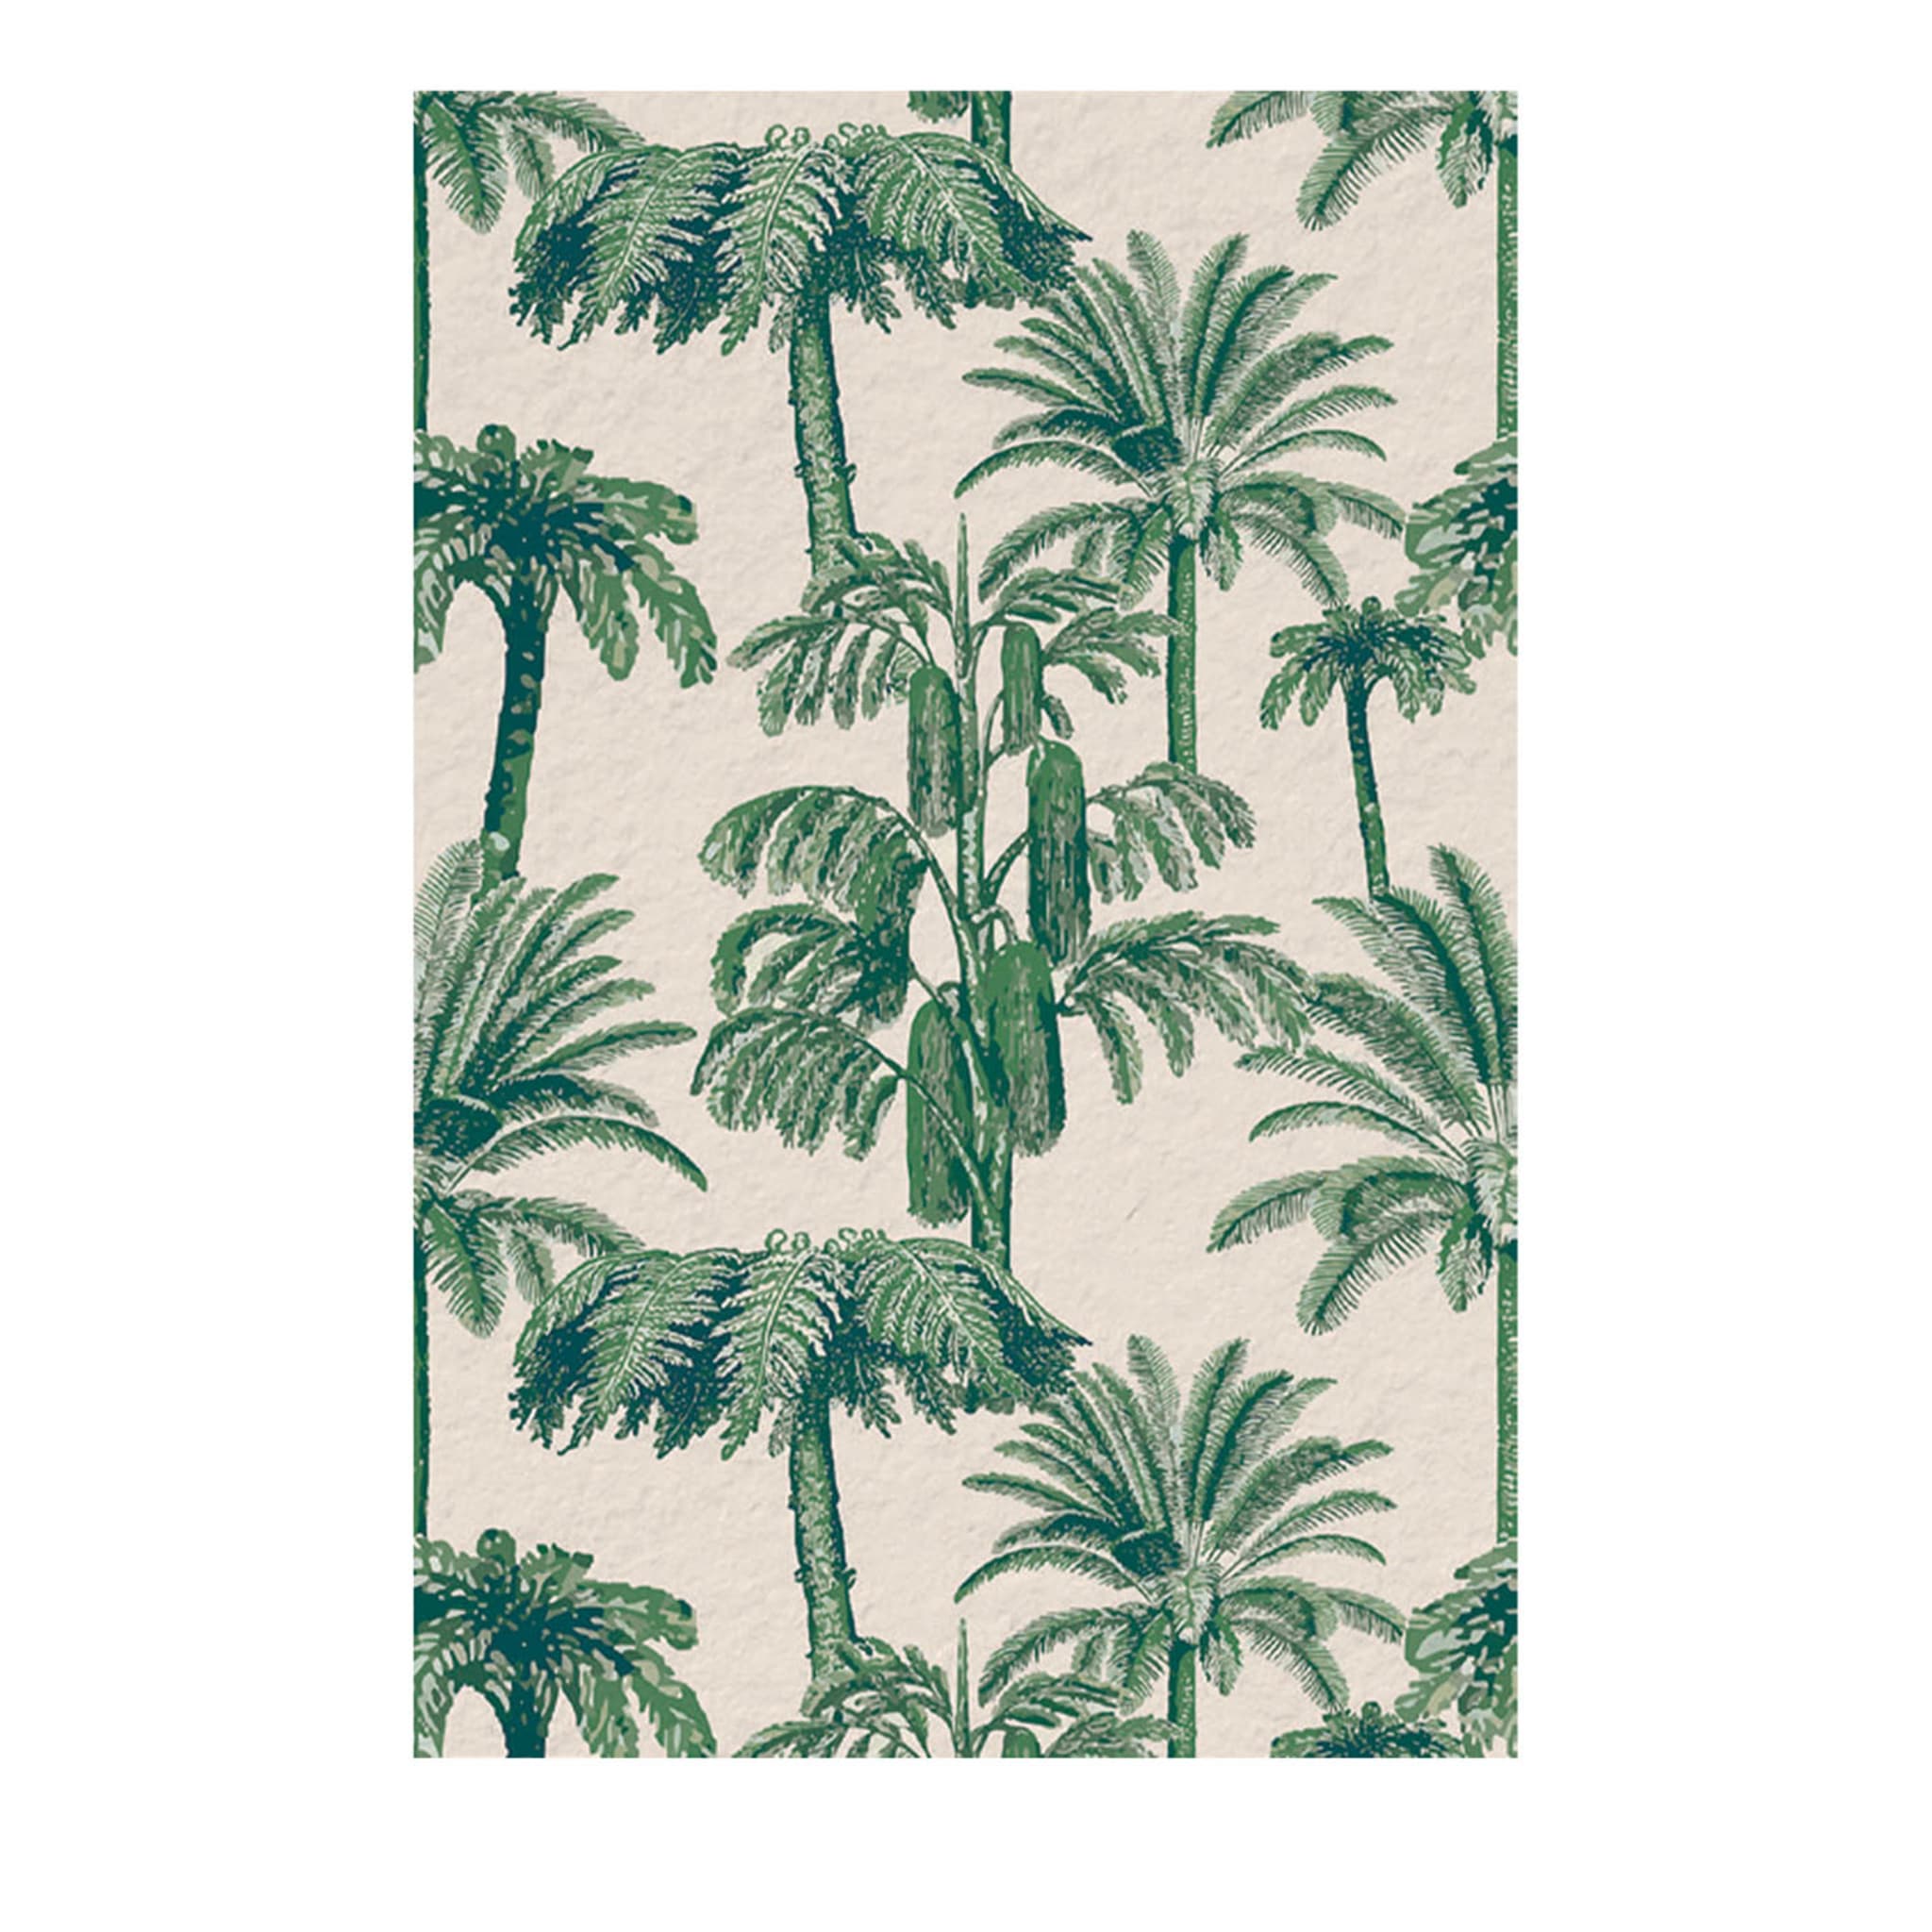 02 Green Palms Outdoor Wallpaper - Main view